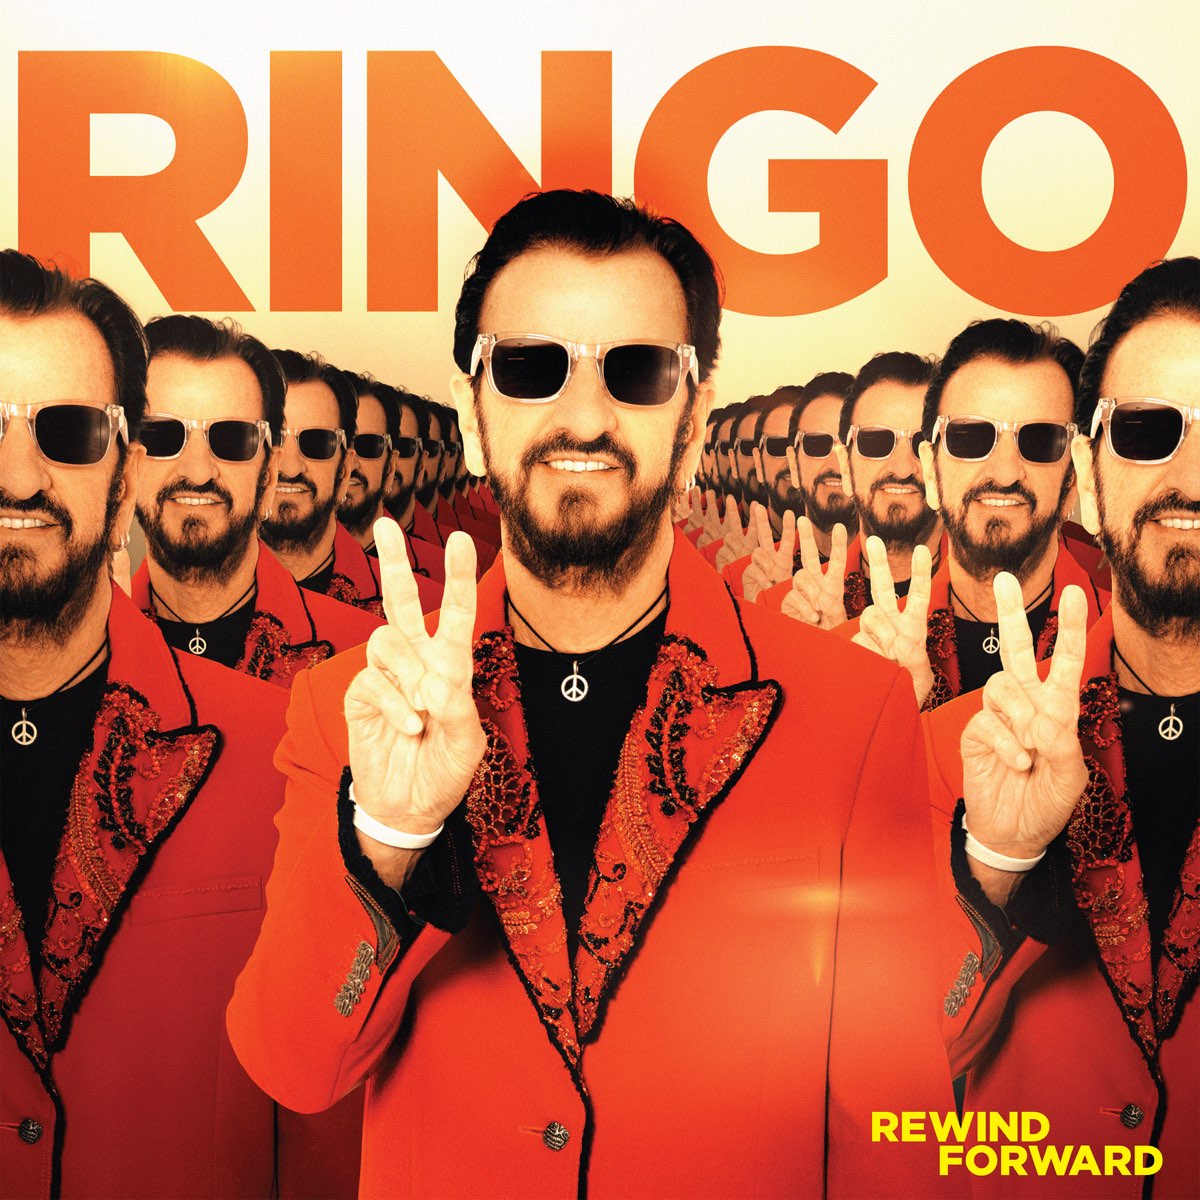 Рок Universal (Aus) Ringo Starr - Rewind Forward EP (V10) (Black Vinyl LP) fuel hose reel with fueling nozzle 1 x 50ft retractable diesel hose reel 300 psi heavy duty auto swivel rewind hose holder reel